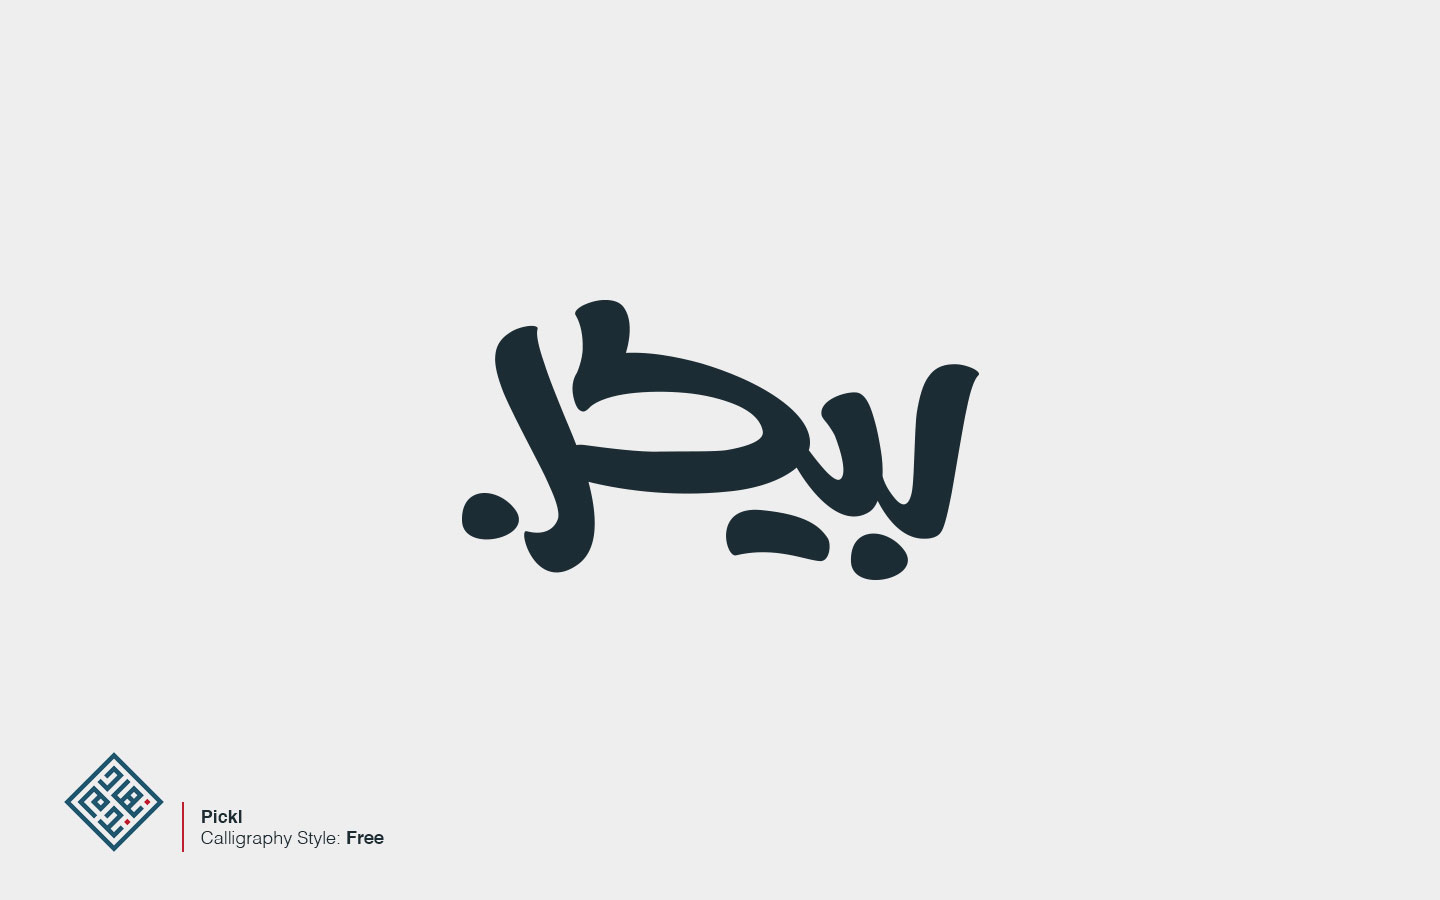 Arabic Pickl logo Arabized